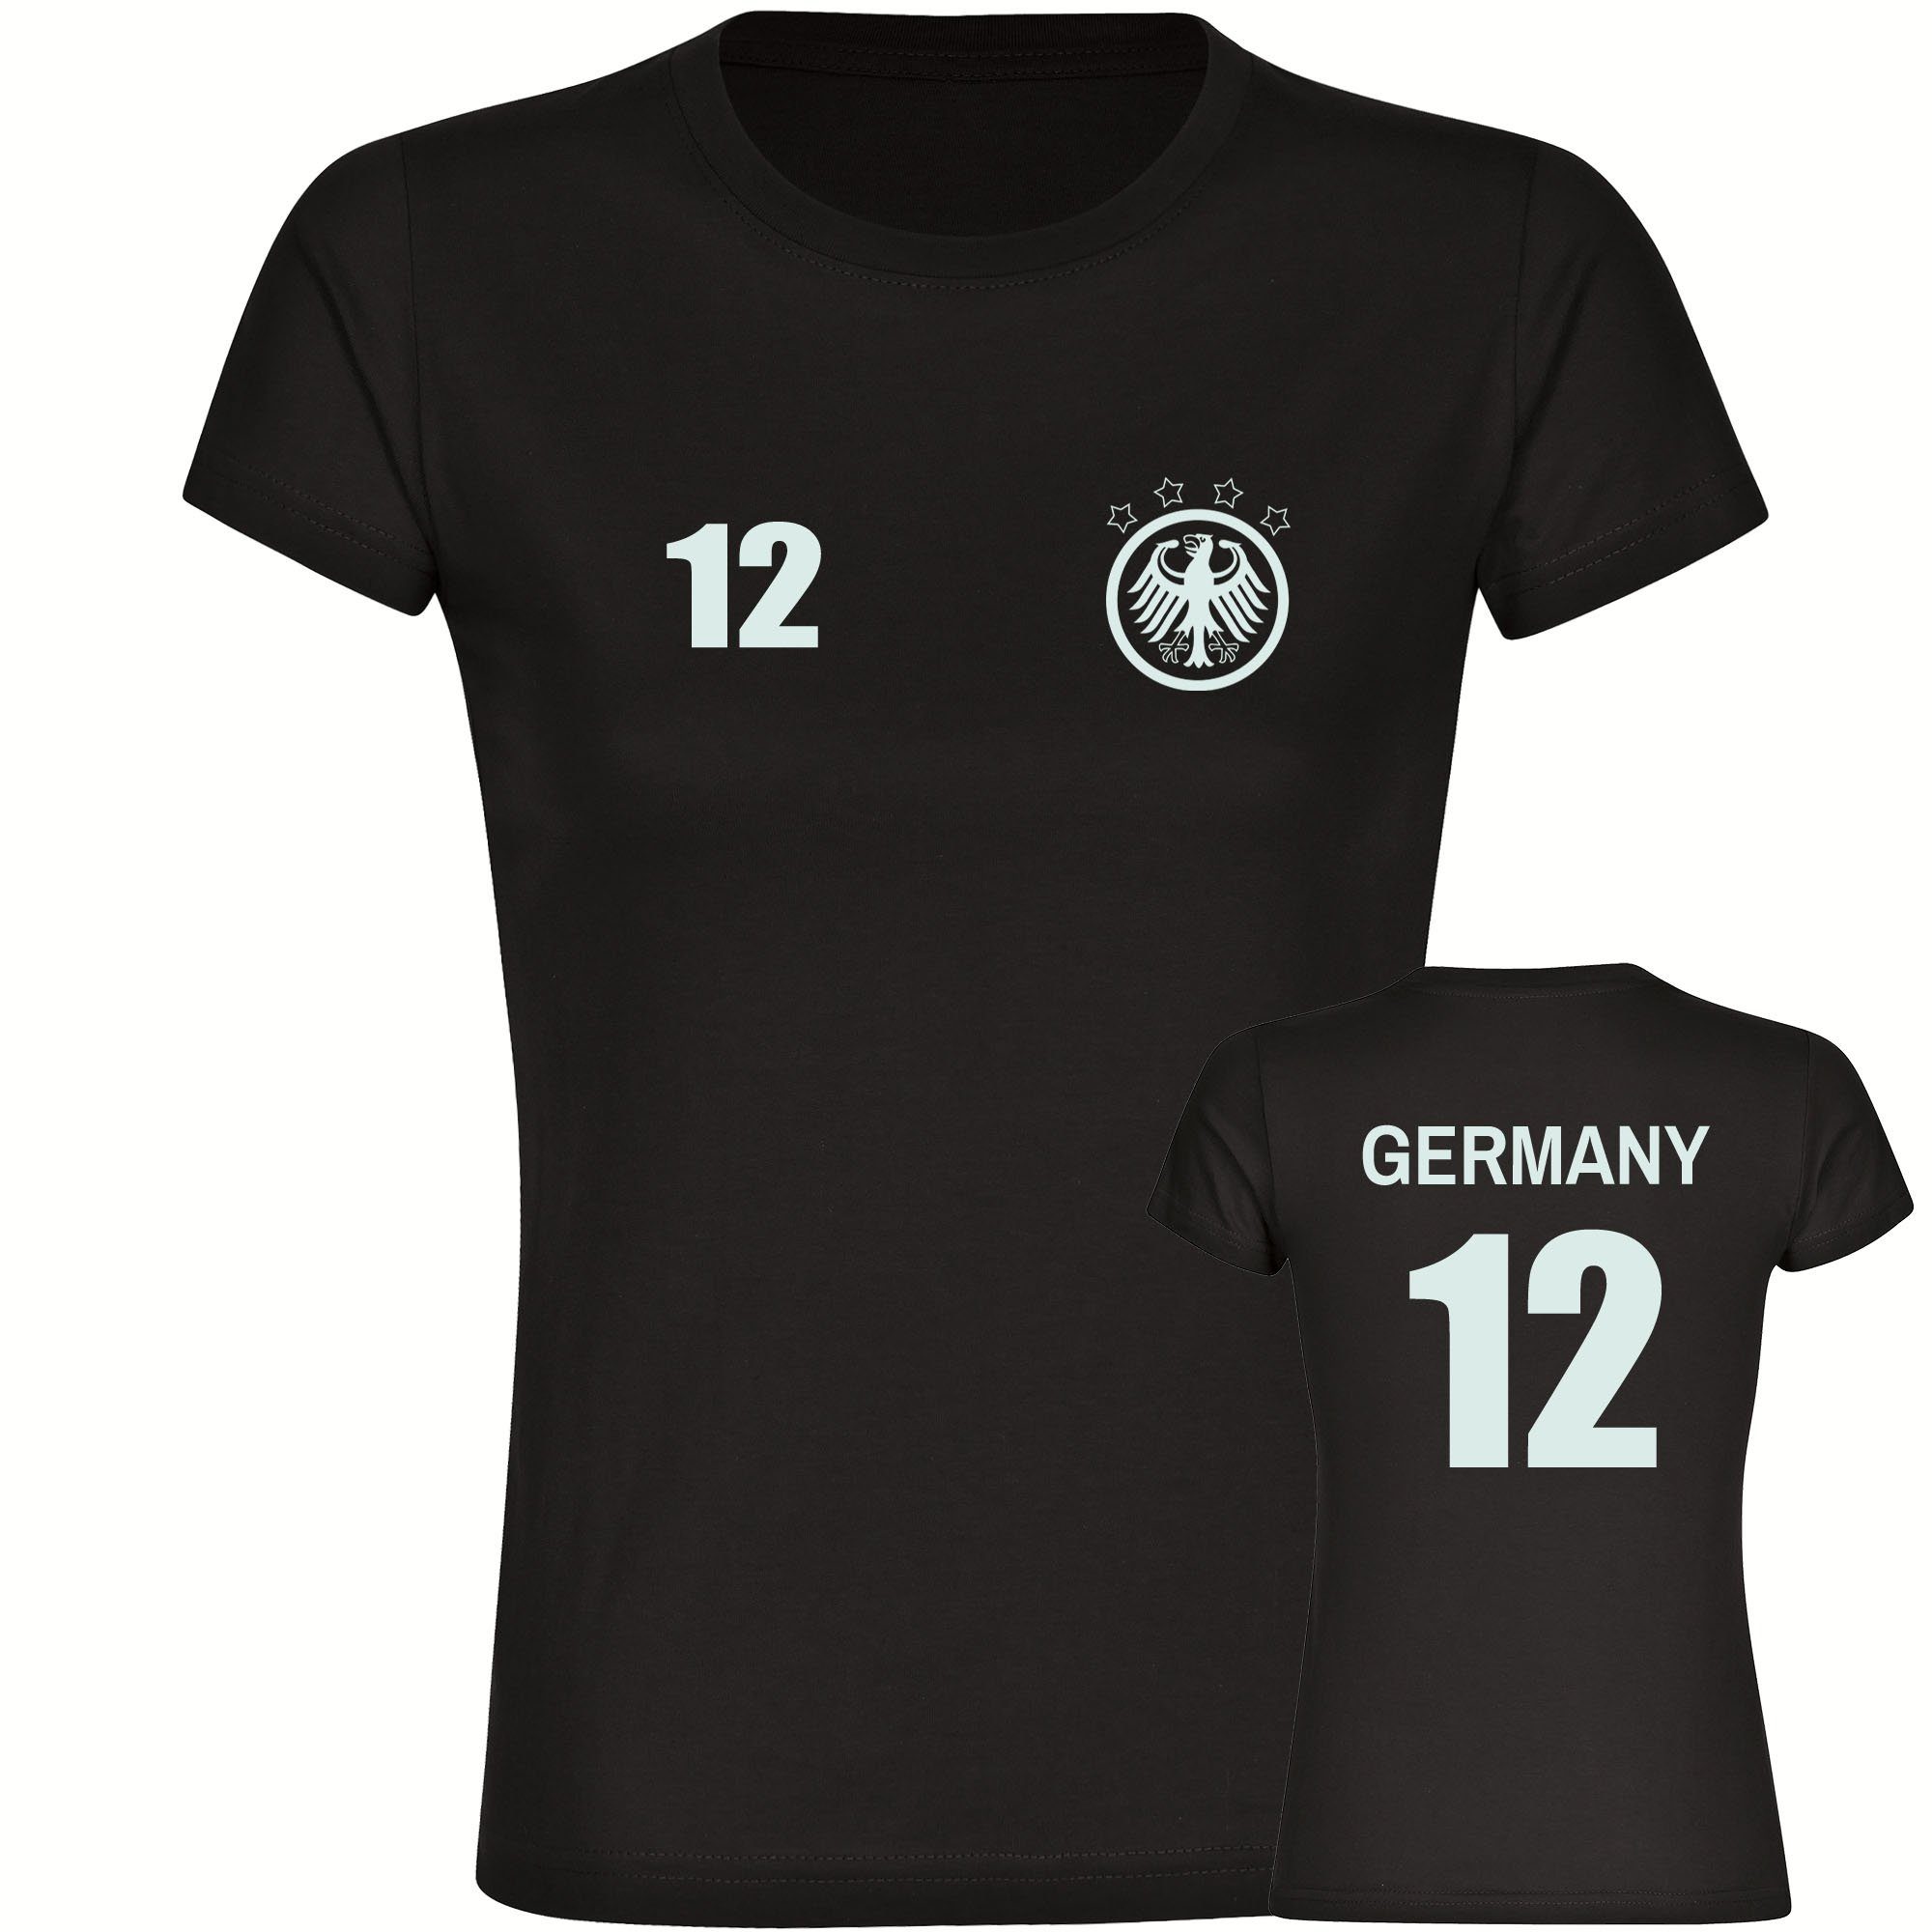 multifanshop T-Shirt Damen Germany - Adler Retro Trikot 12 - Frauen